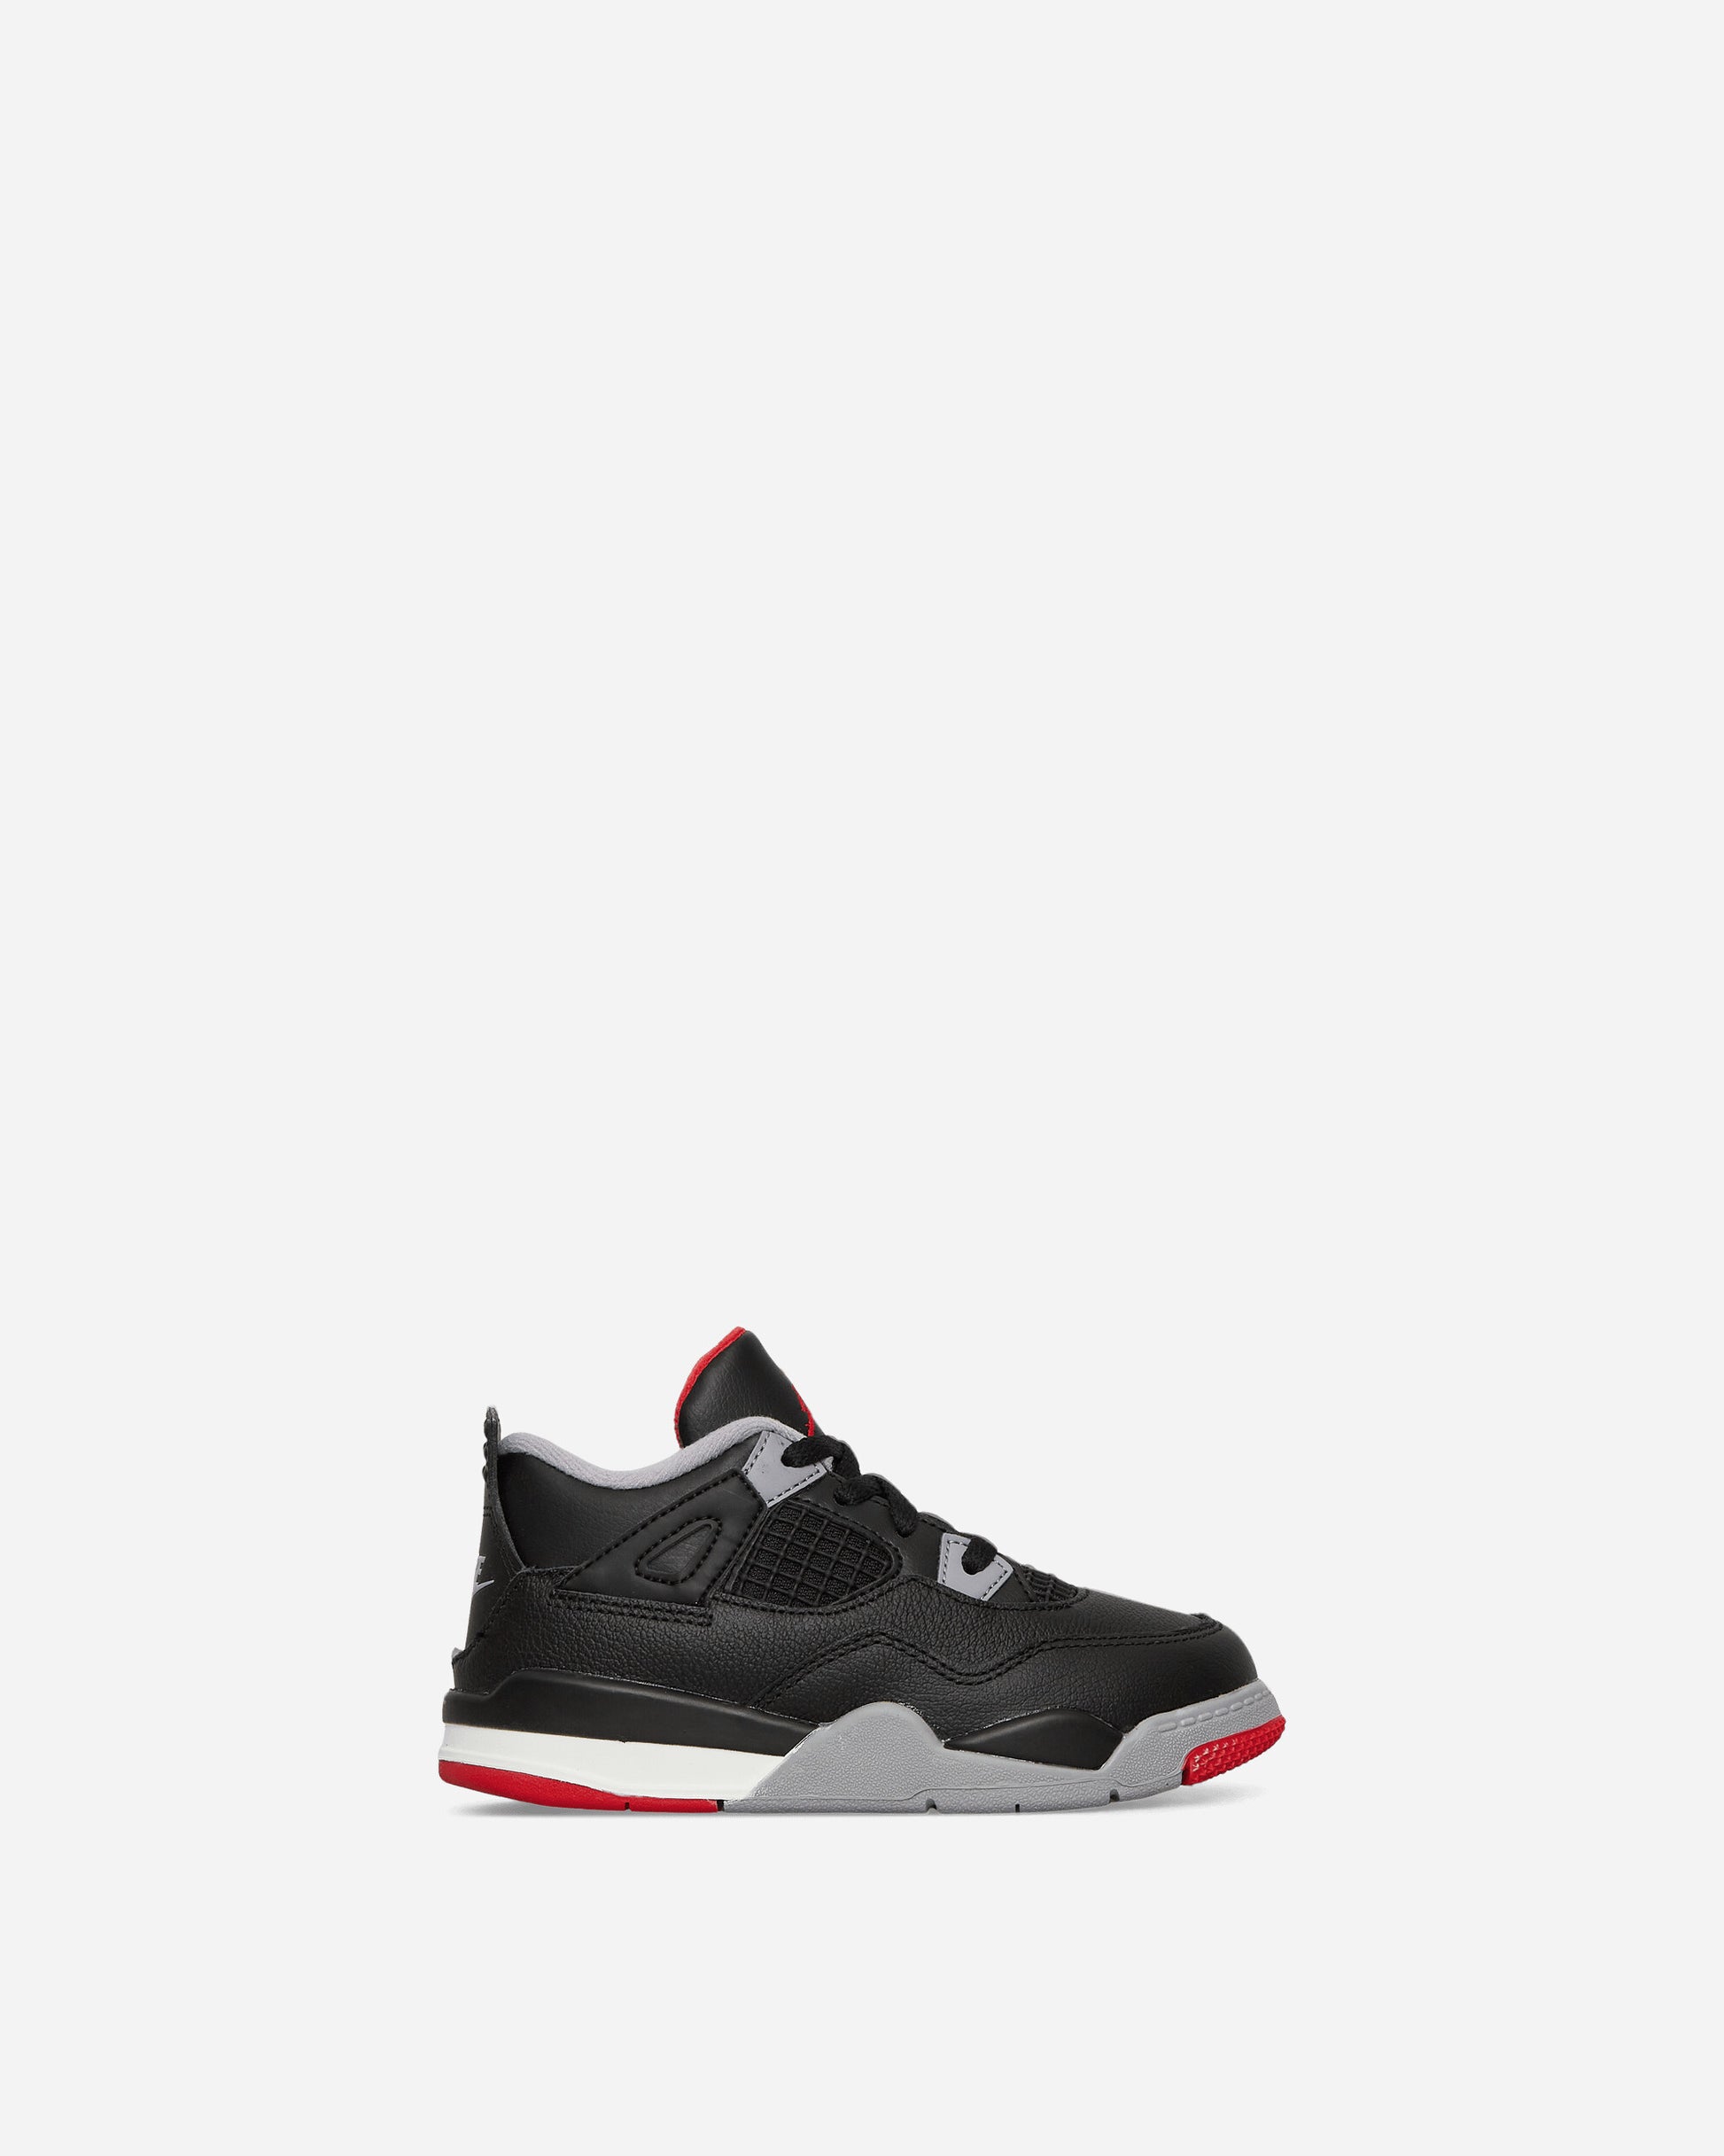 Nike Jordan Jordan 4 Retro (Td) Black/Fire Red Sneakers High BQ7670-006